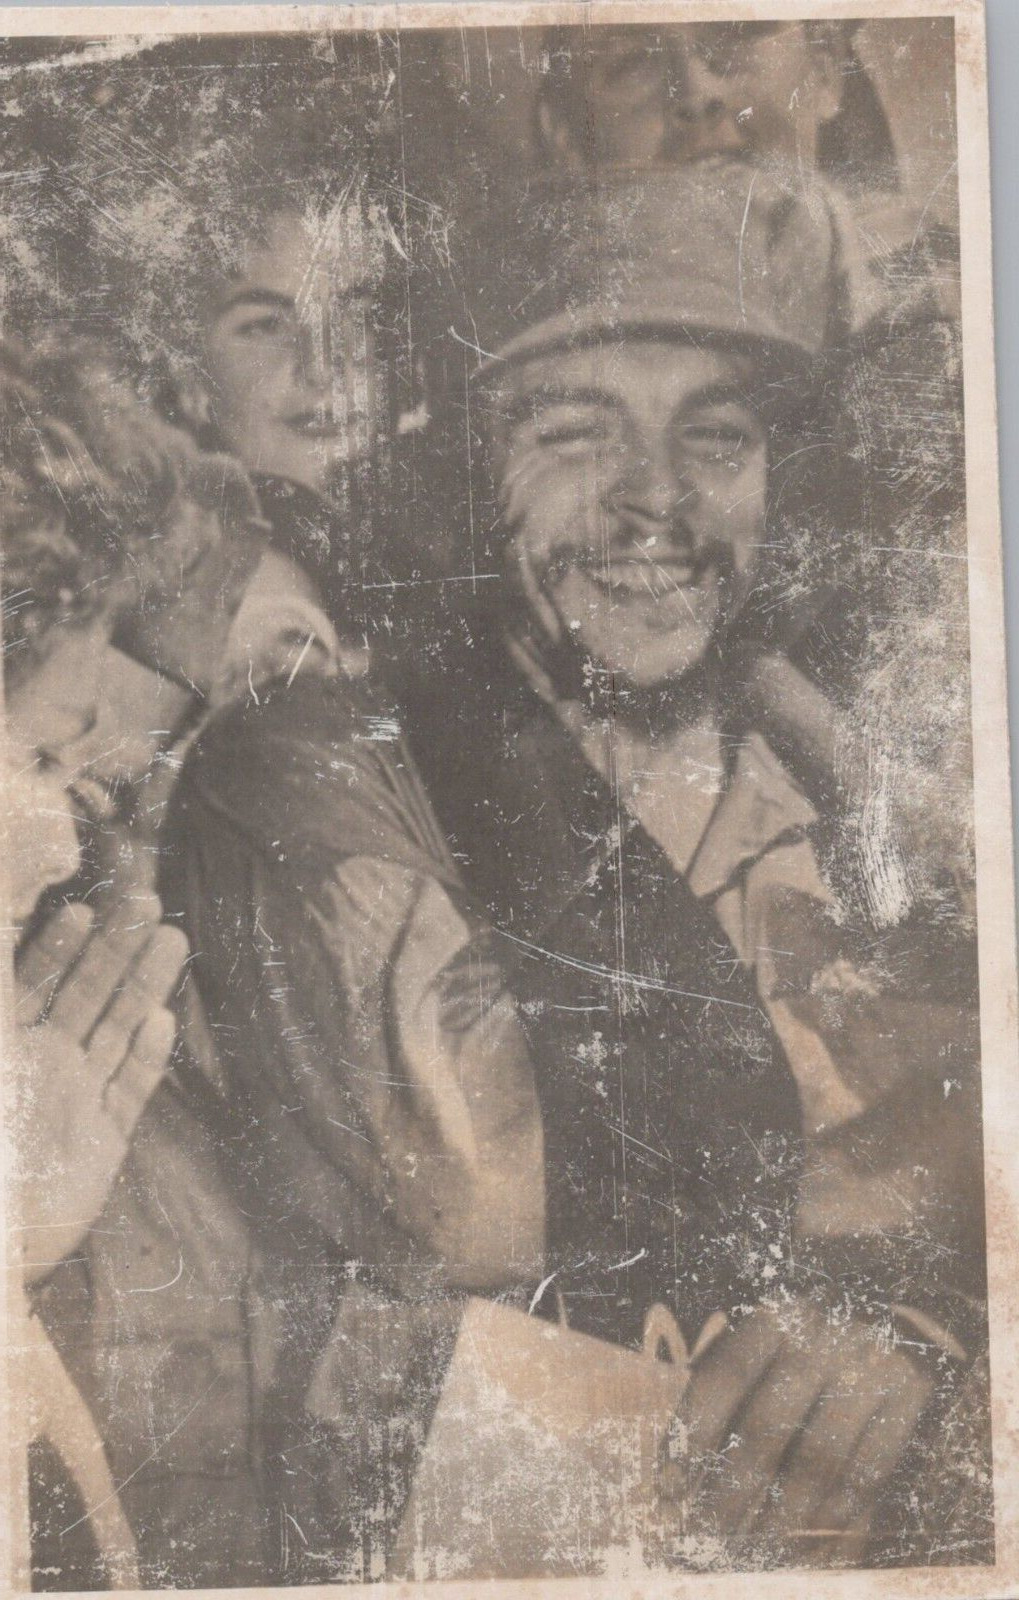 CUBA CUBAN REVOLUTION MOMENT ERNESTO CHE GUEVARA PORTRAIT 1970s ORIG Photo C36